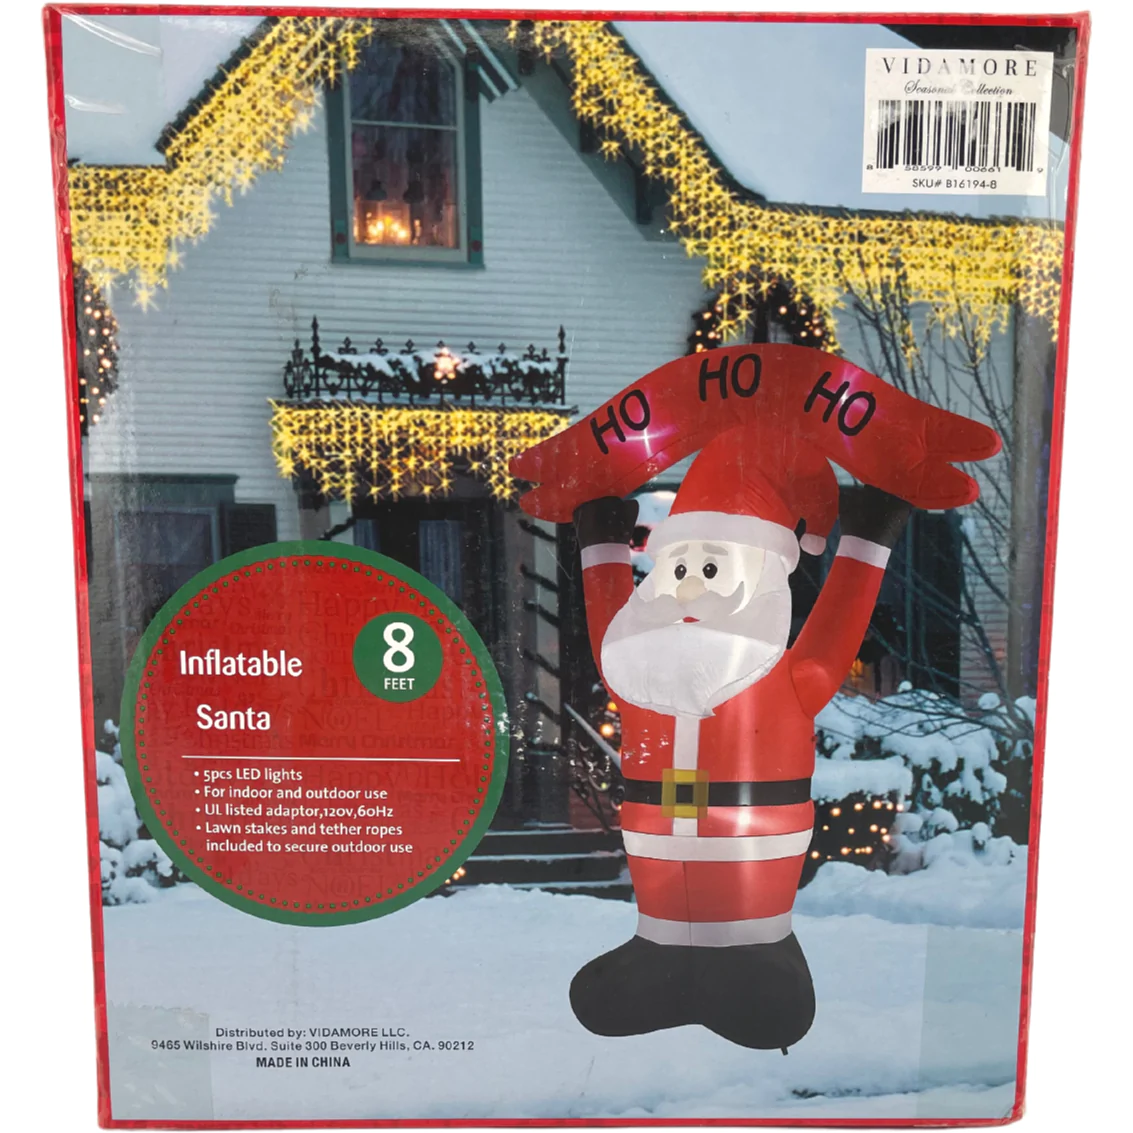 Vidamore Inflatable Santa Claus / 8 ft Tall / "HoHoHo" Sign / Outdoor Christmas Decorations